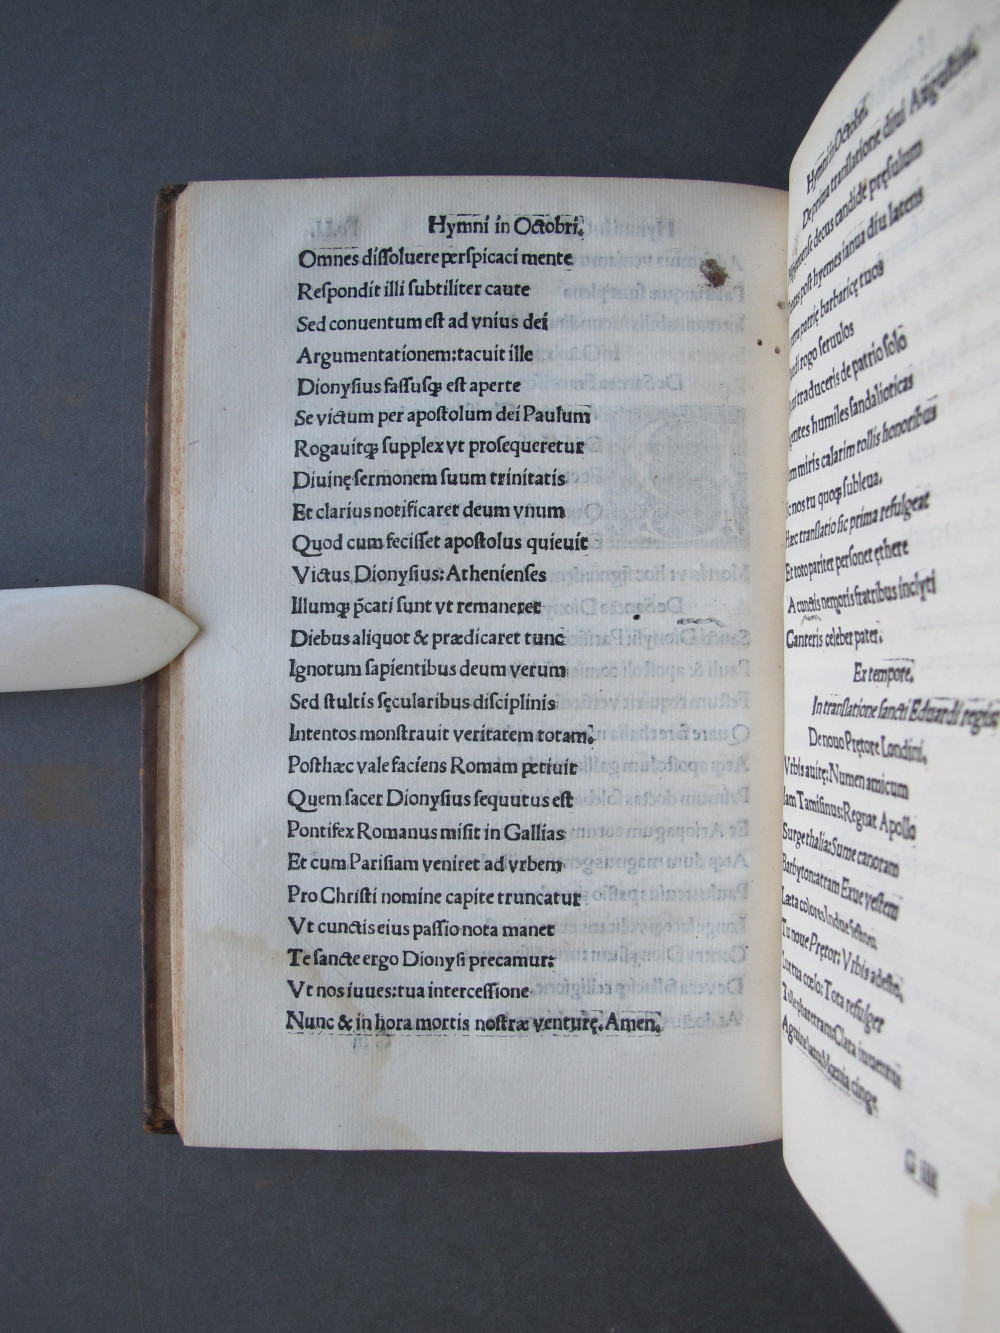 Folio 51 verso